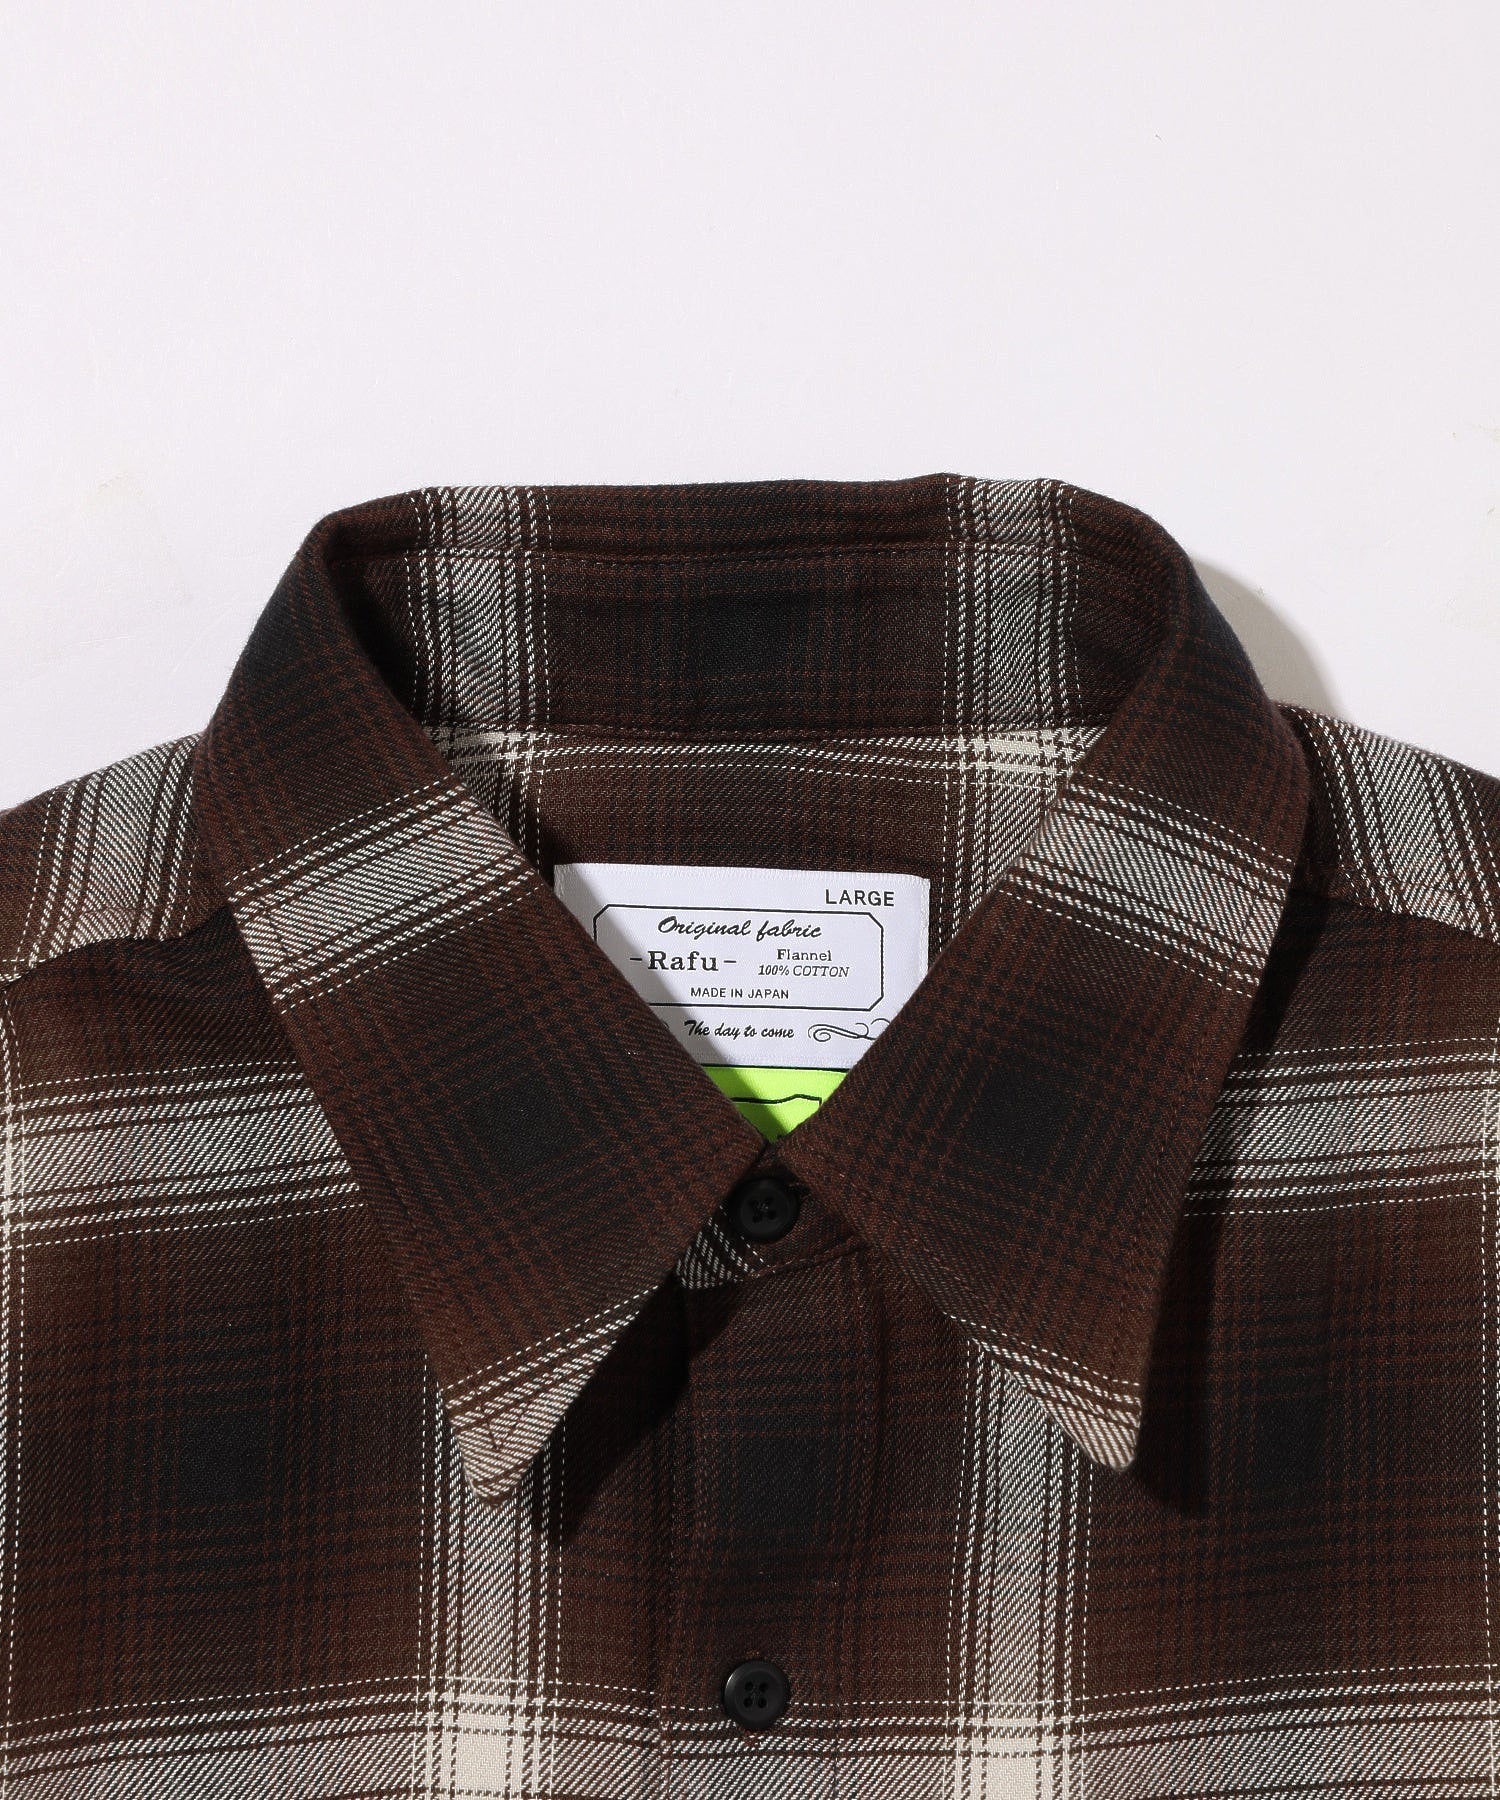 LOOSE JOINTS/ルーズジョインツ/TURTLEHEADS - Confucius Flannel shirt